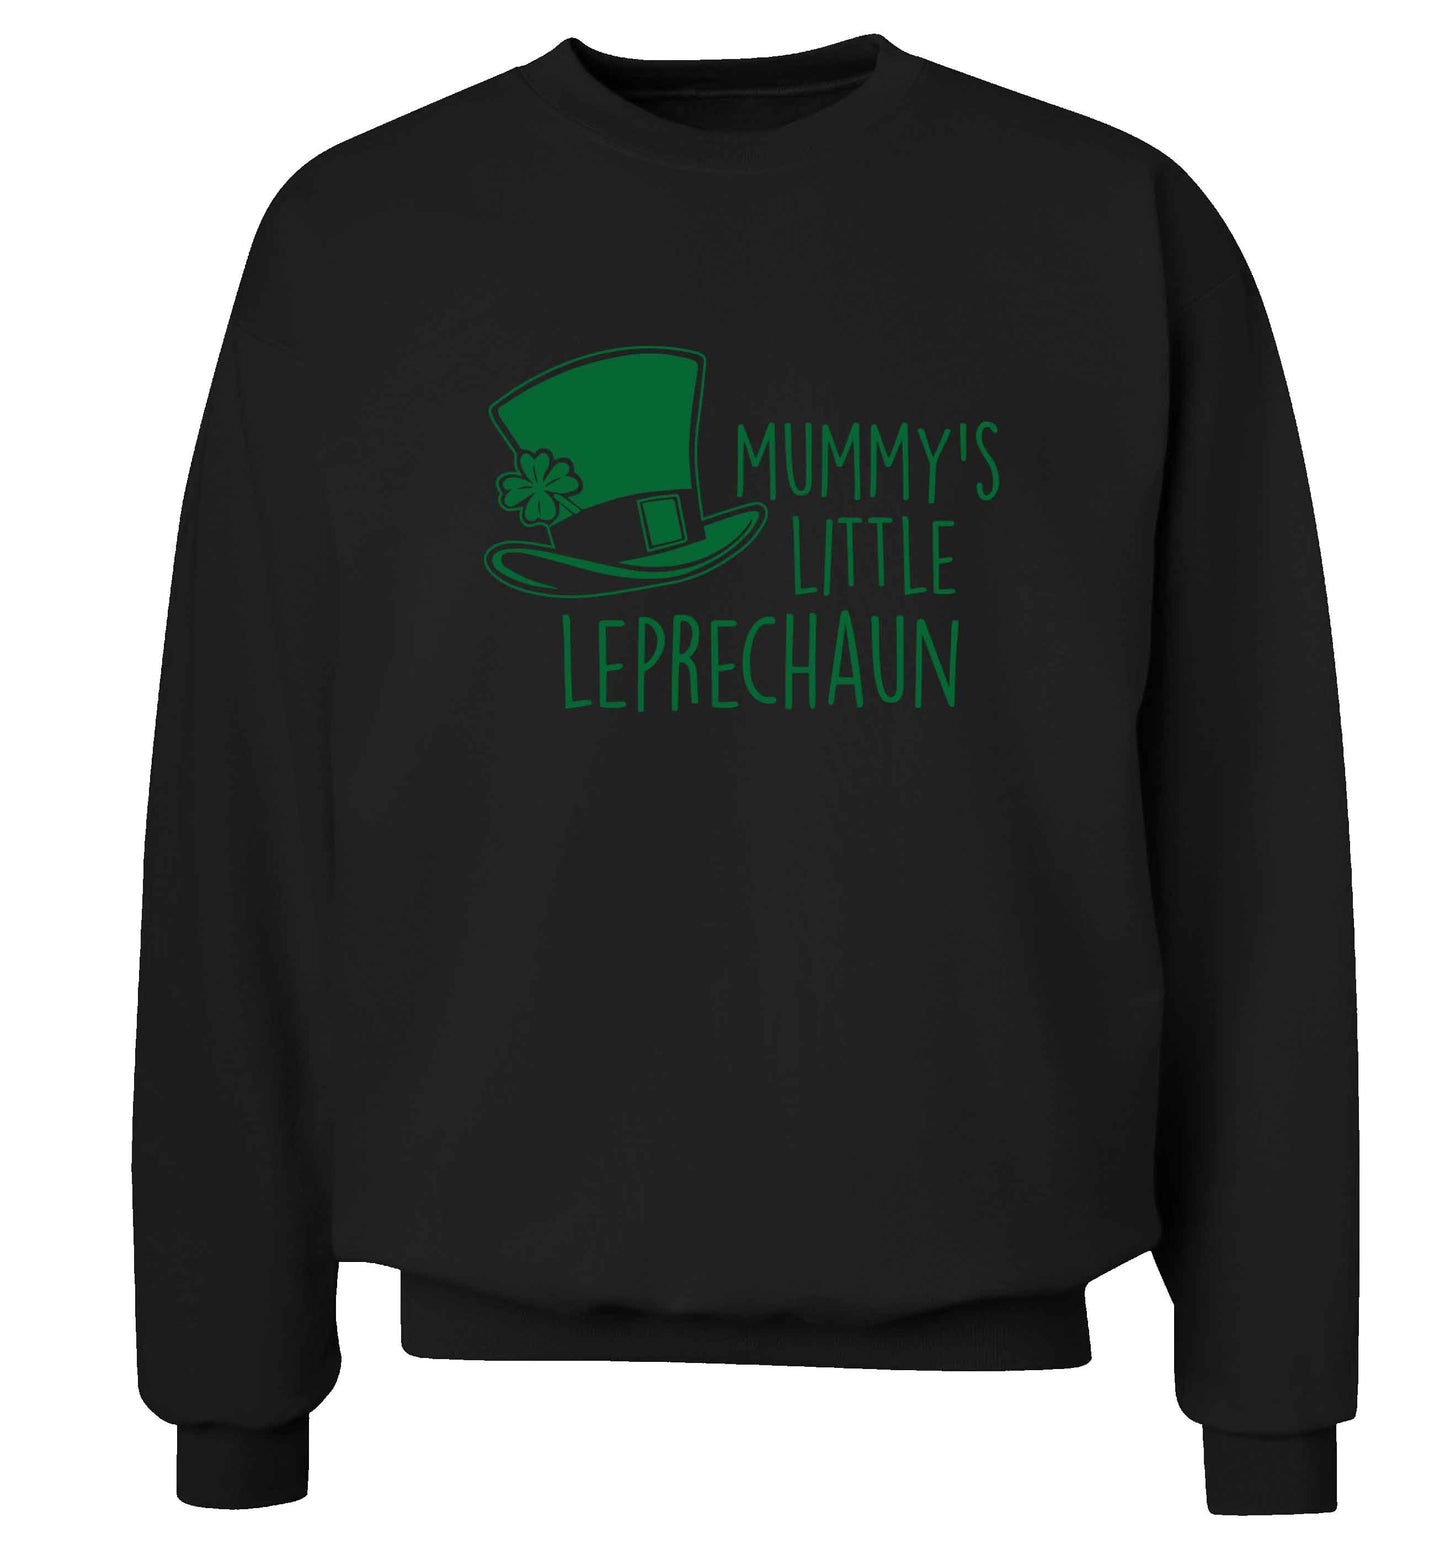 Mummy's little leprechaun adult's unisex black sweater 2XL